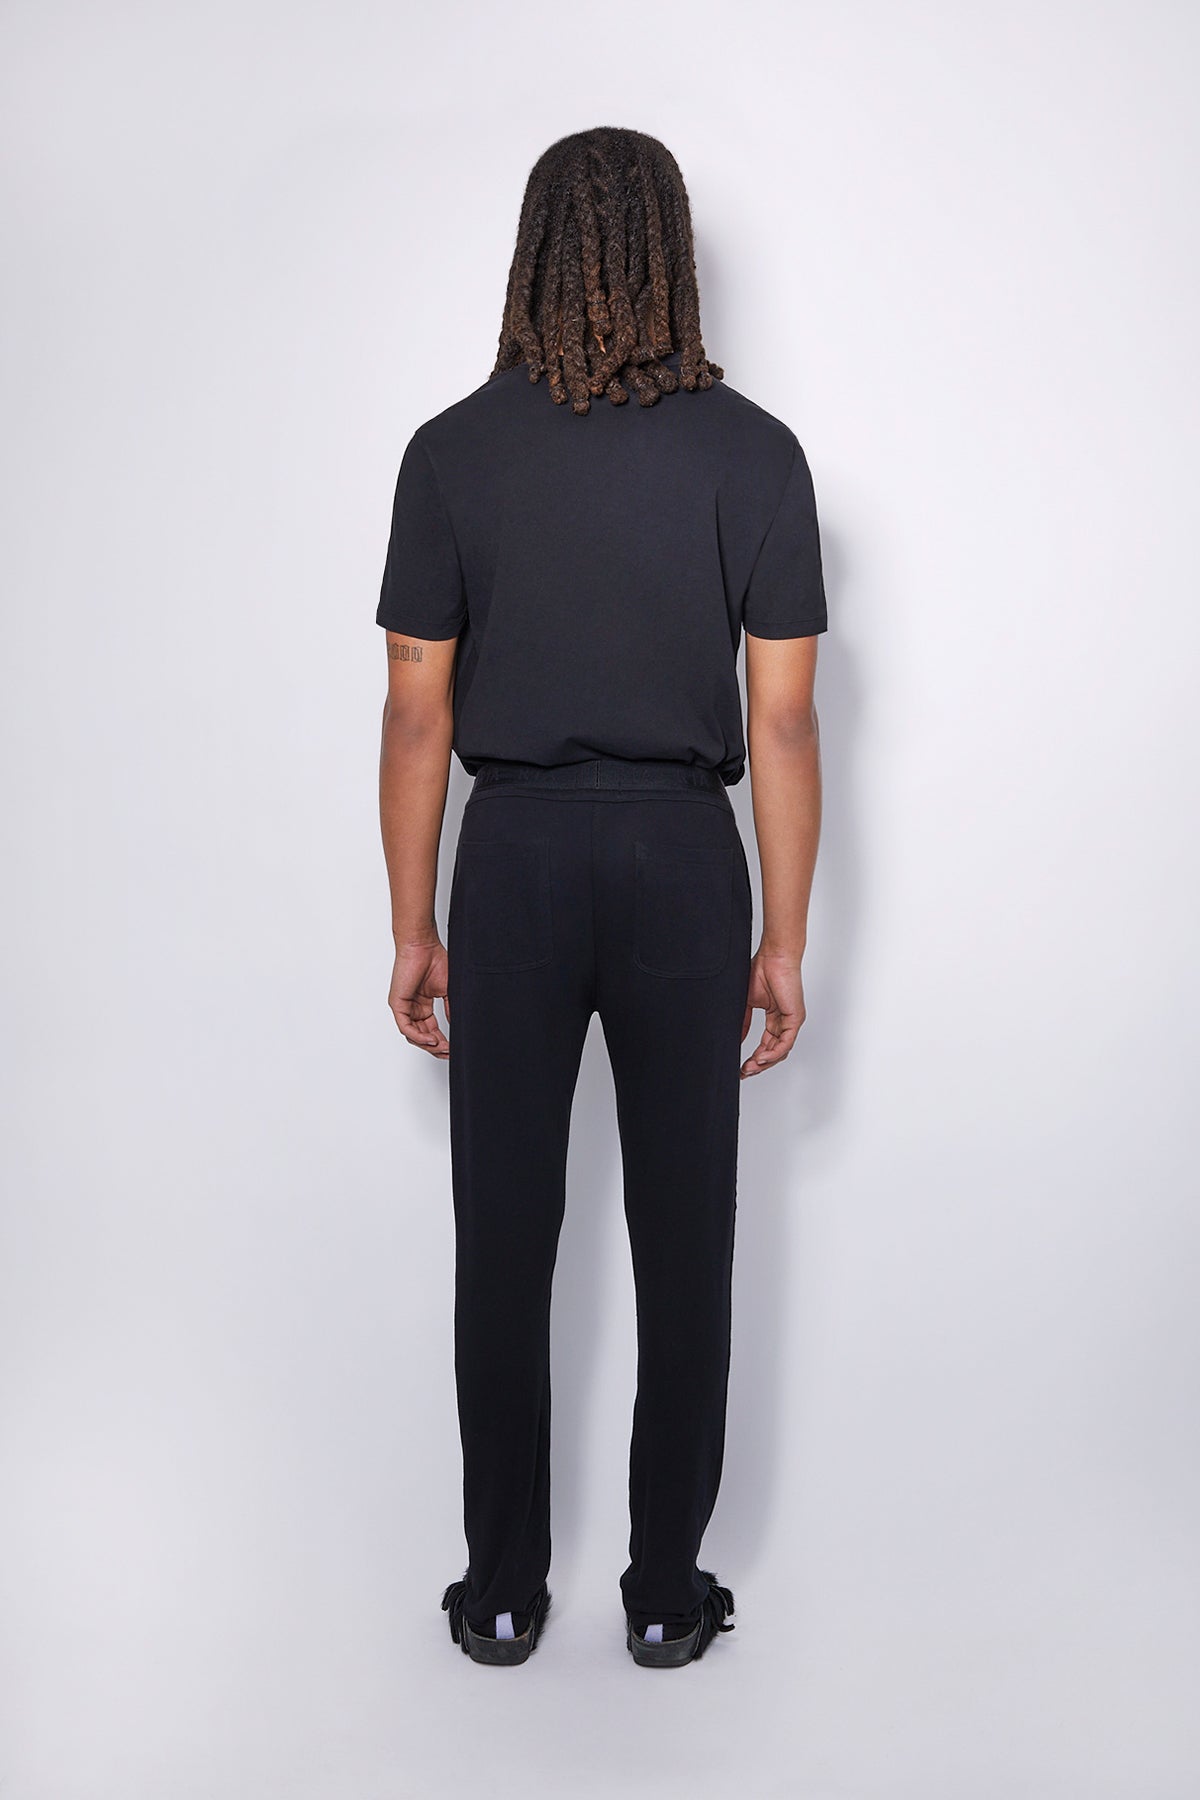 MEN’S BLACK TAPERED PANTS | RTA CLOTHING